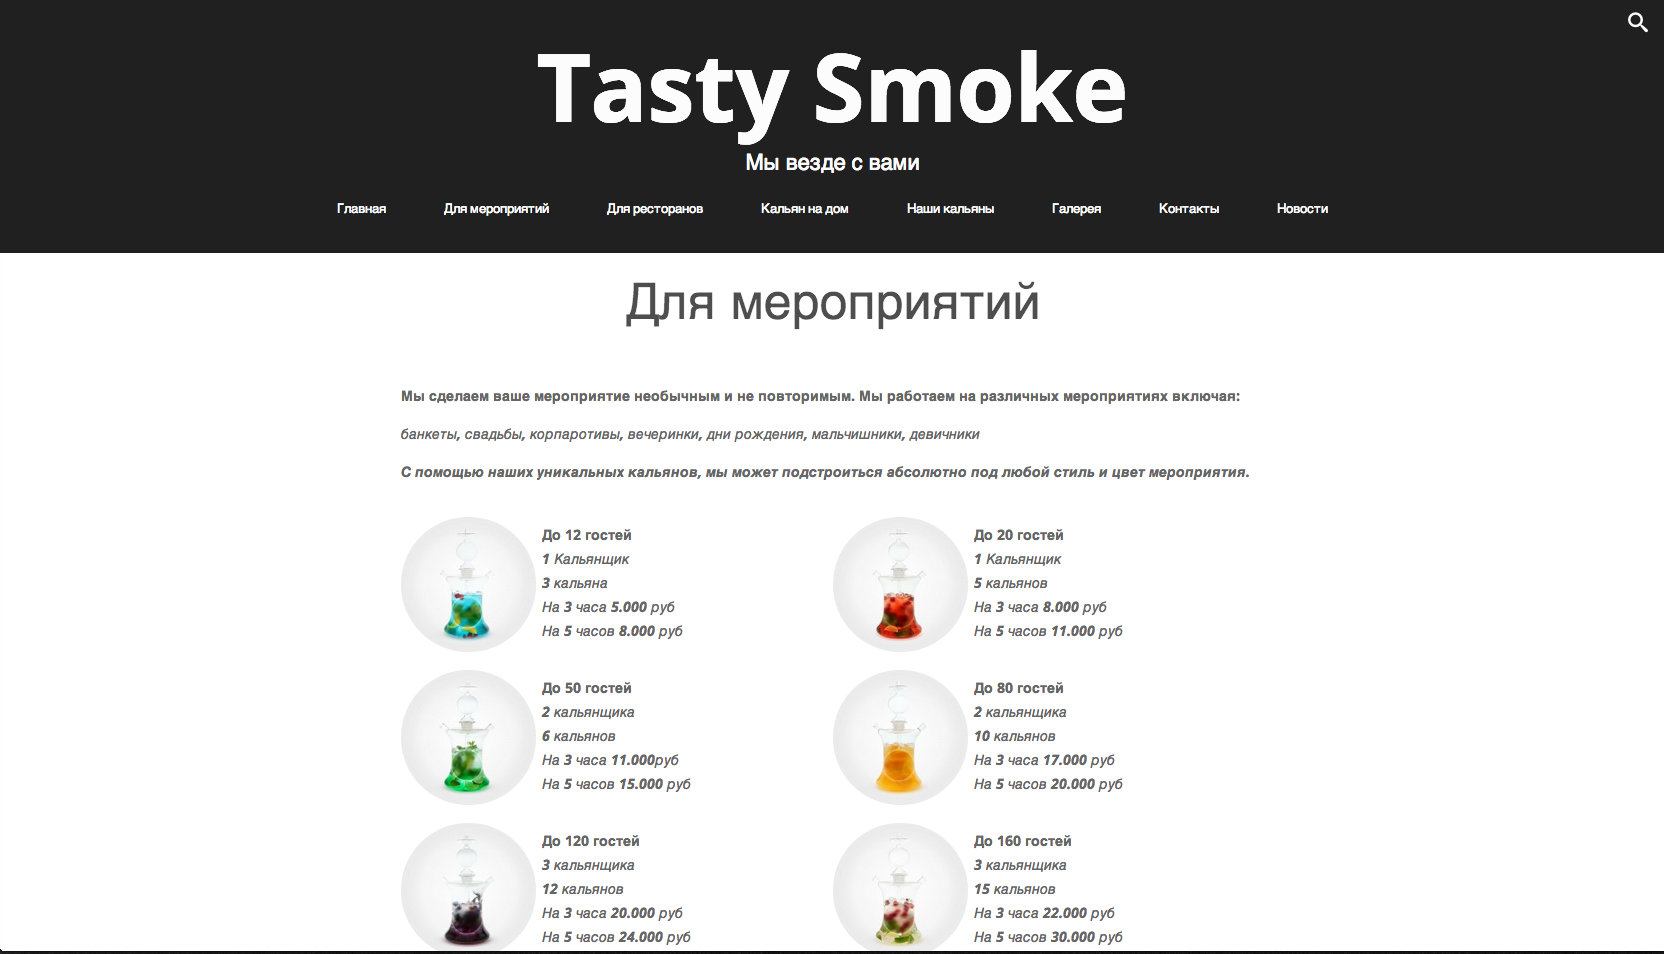 Tasty Smoke